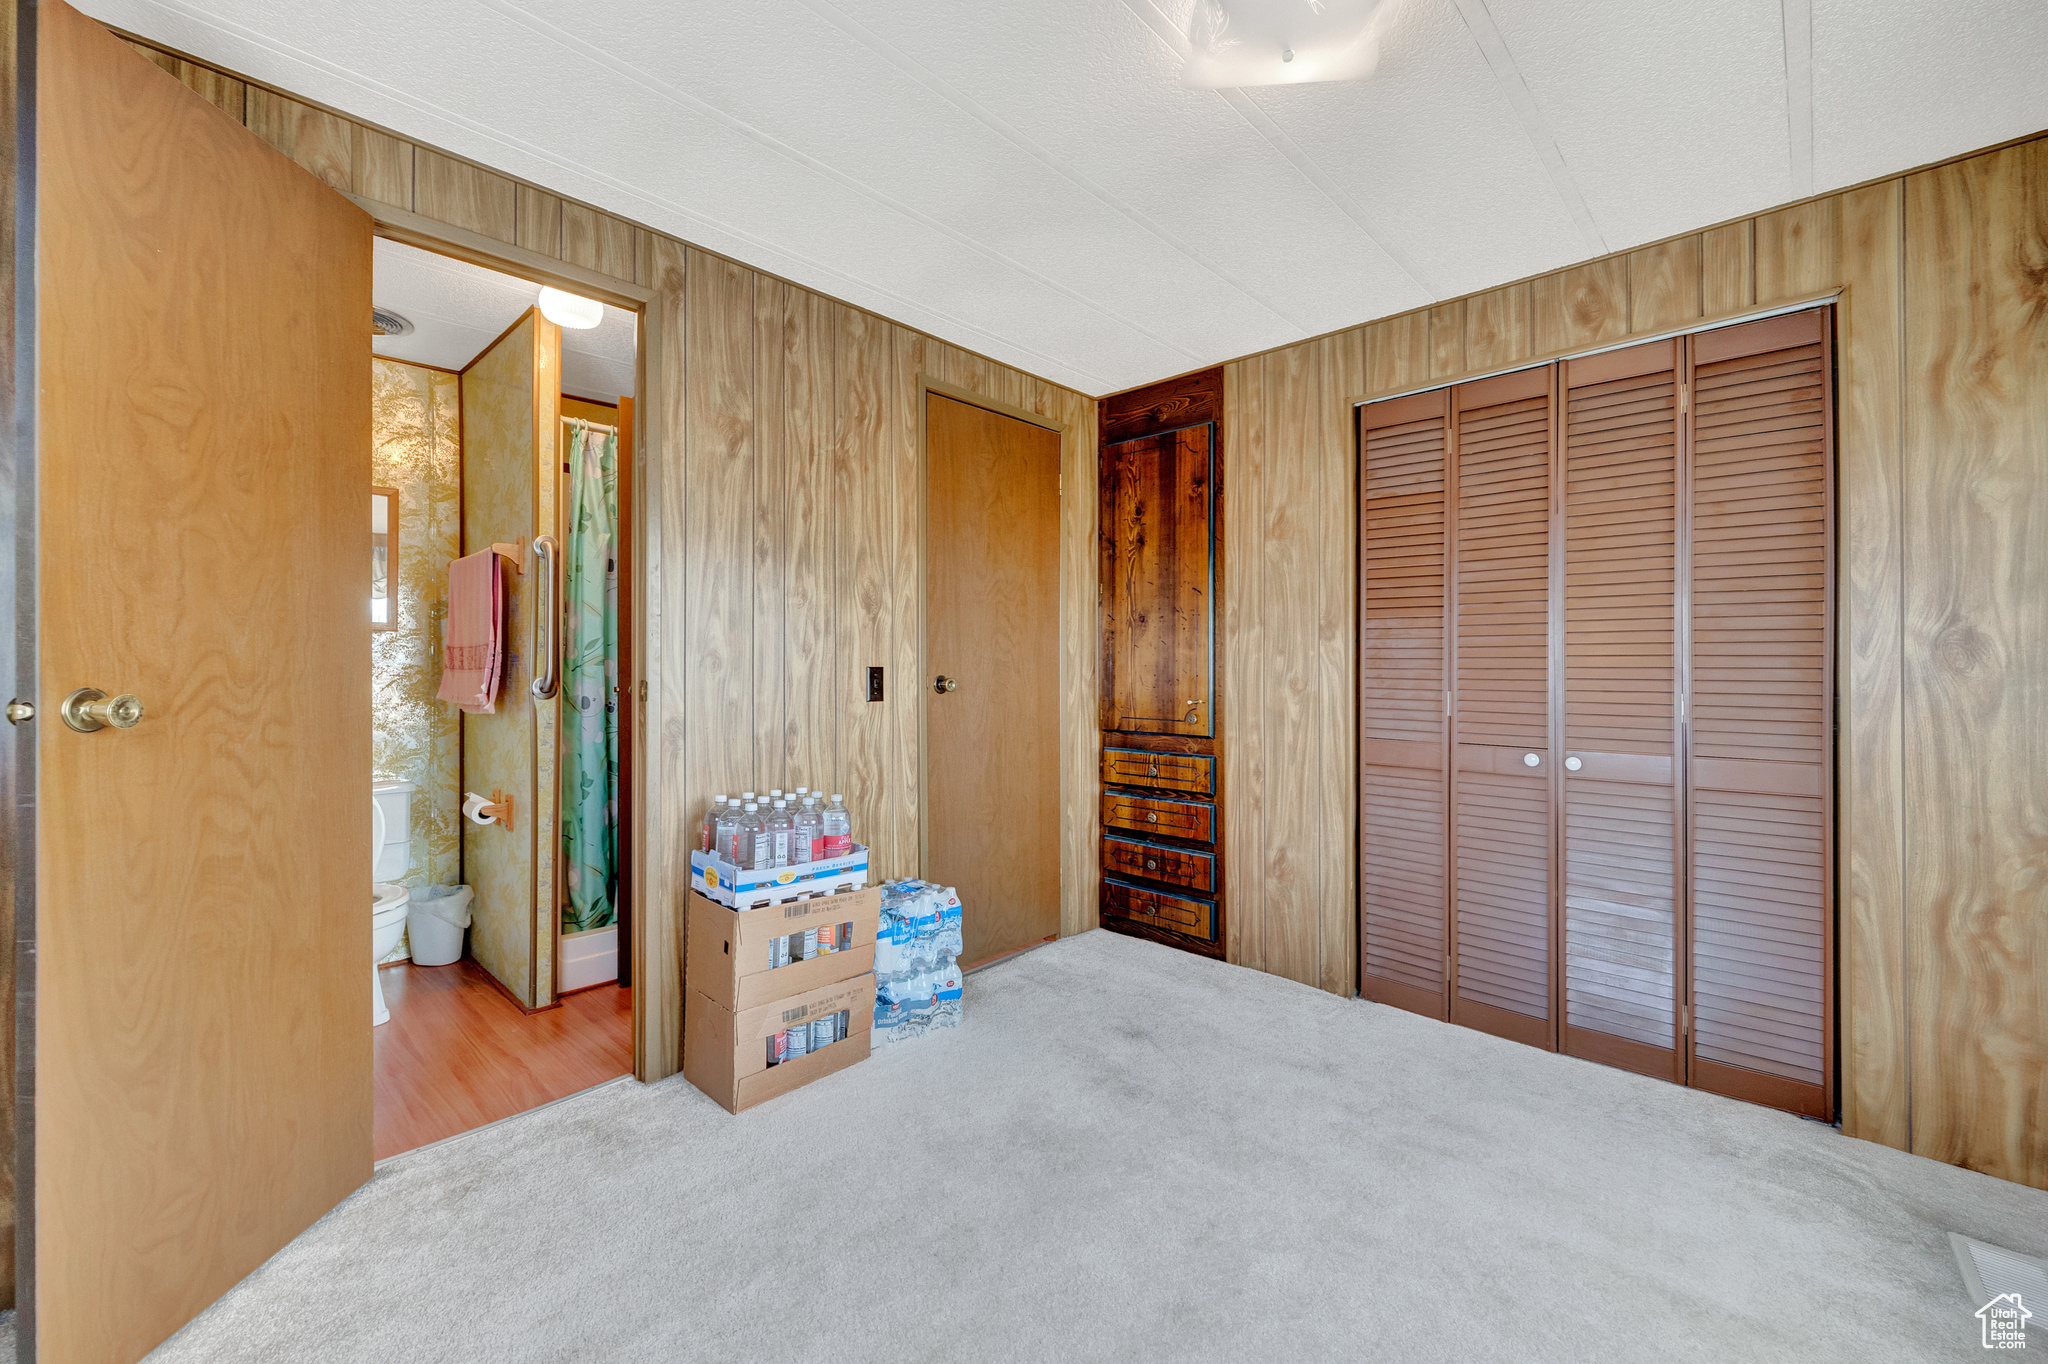 Bedroom with a closet, carpet flooring, and wooden walls